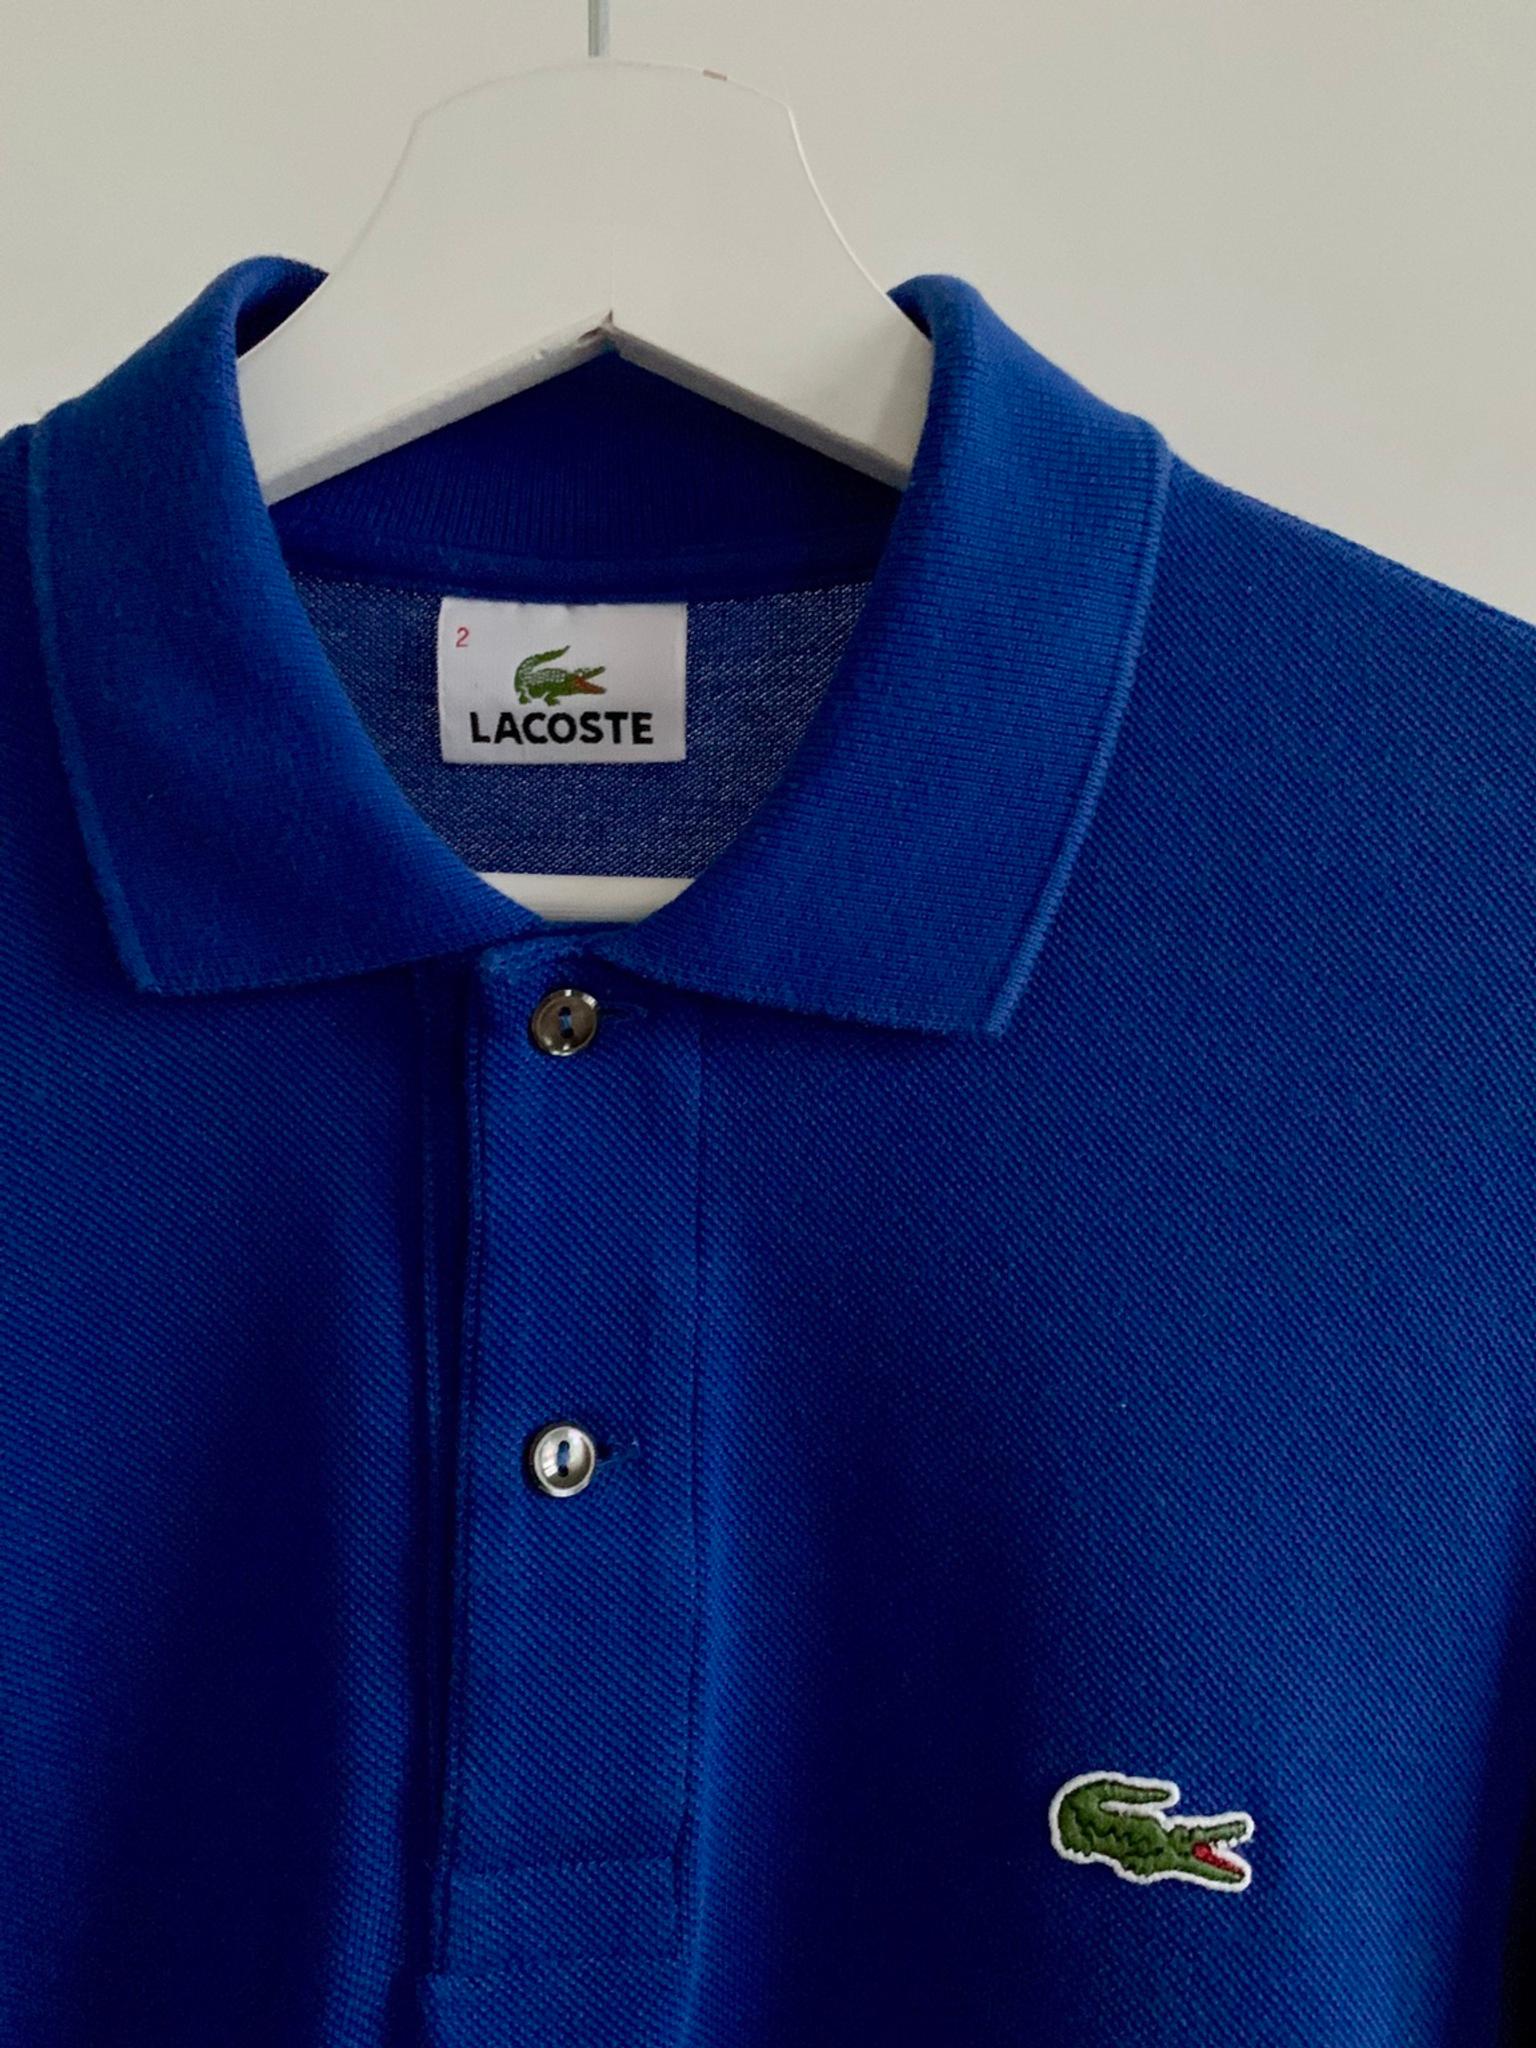 Lacoste Polo Shirts Blue Nils Stucki Kieferorthopade - how to get roblox shirts for free 2019 nils stucki kieferorthopade